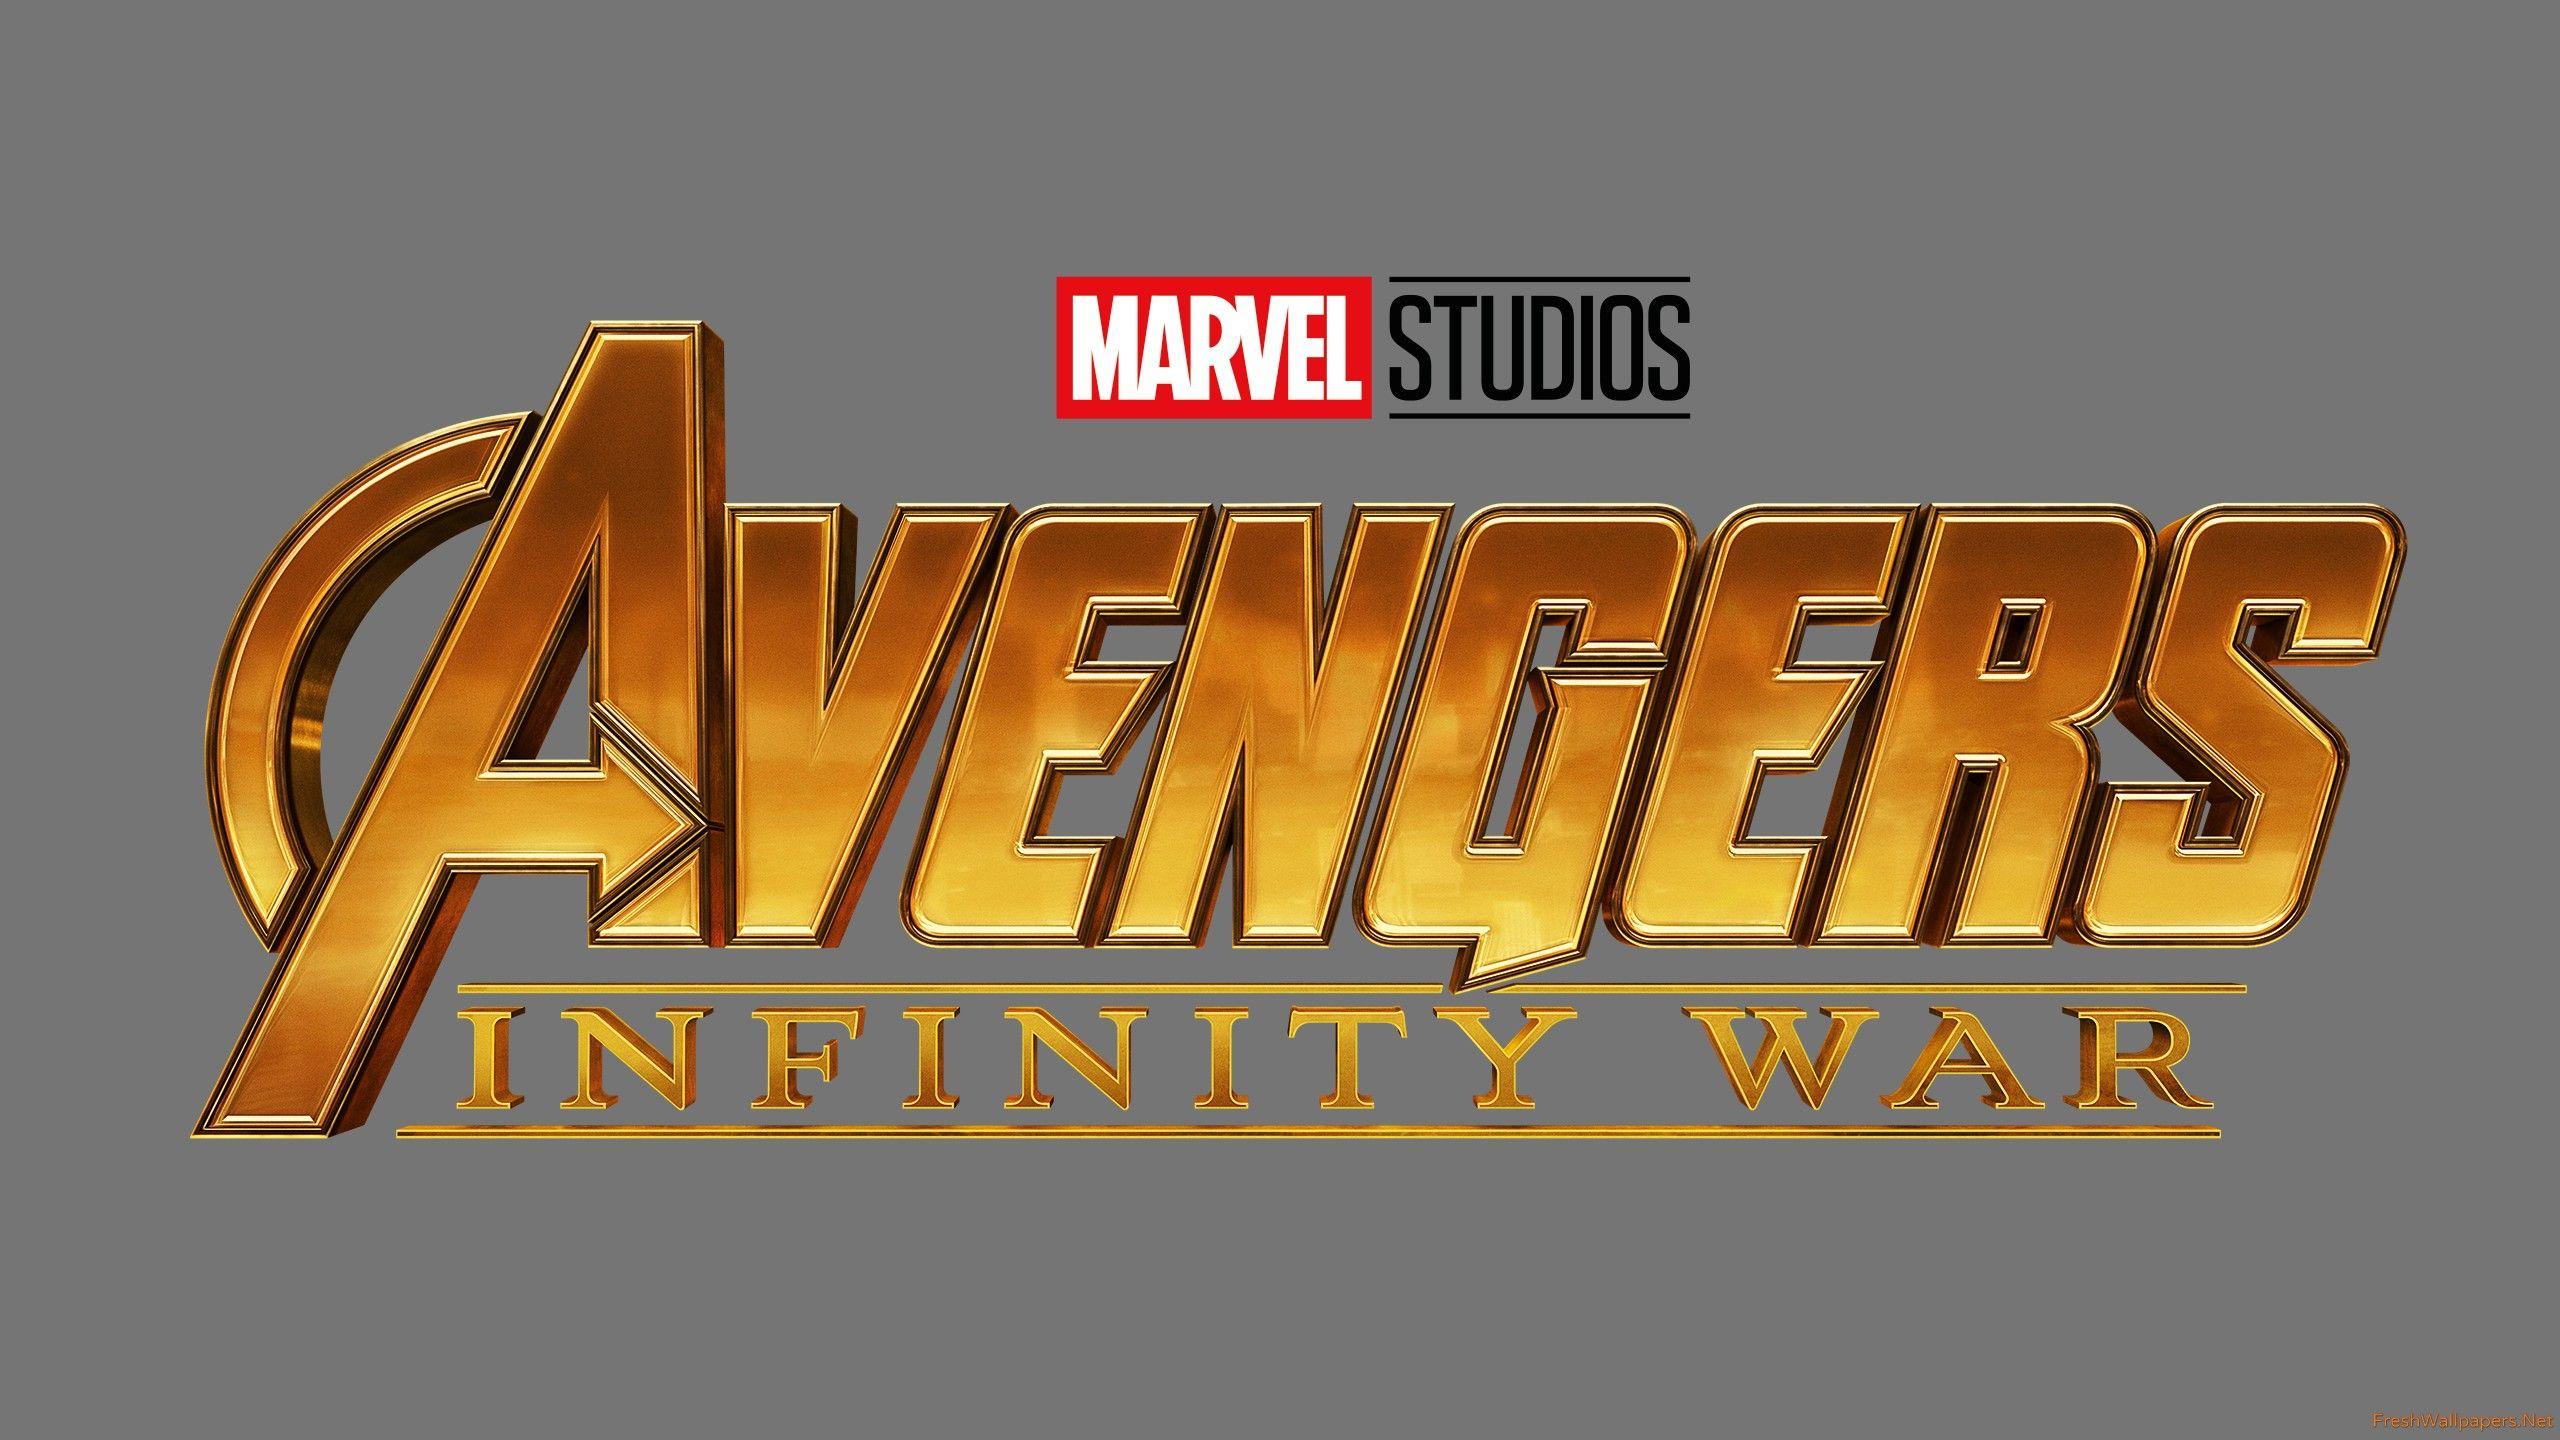 Avengers Infinity War Logo - Avengers Infinity War Movie Logo wallpapers | Freshwallpapers